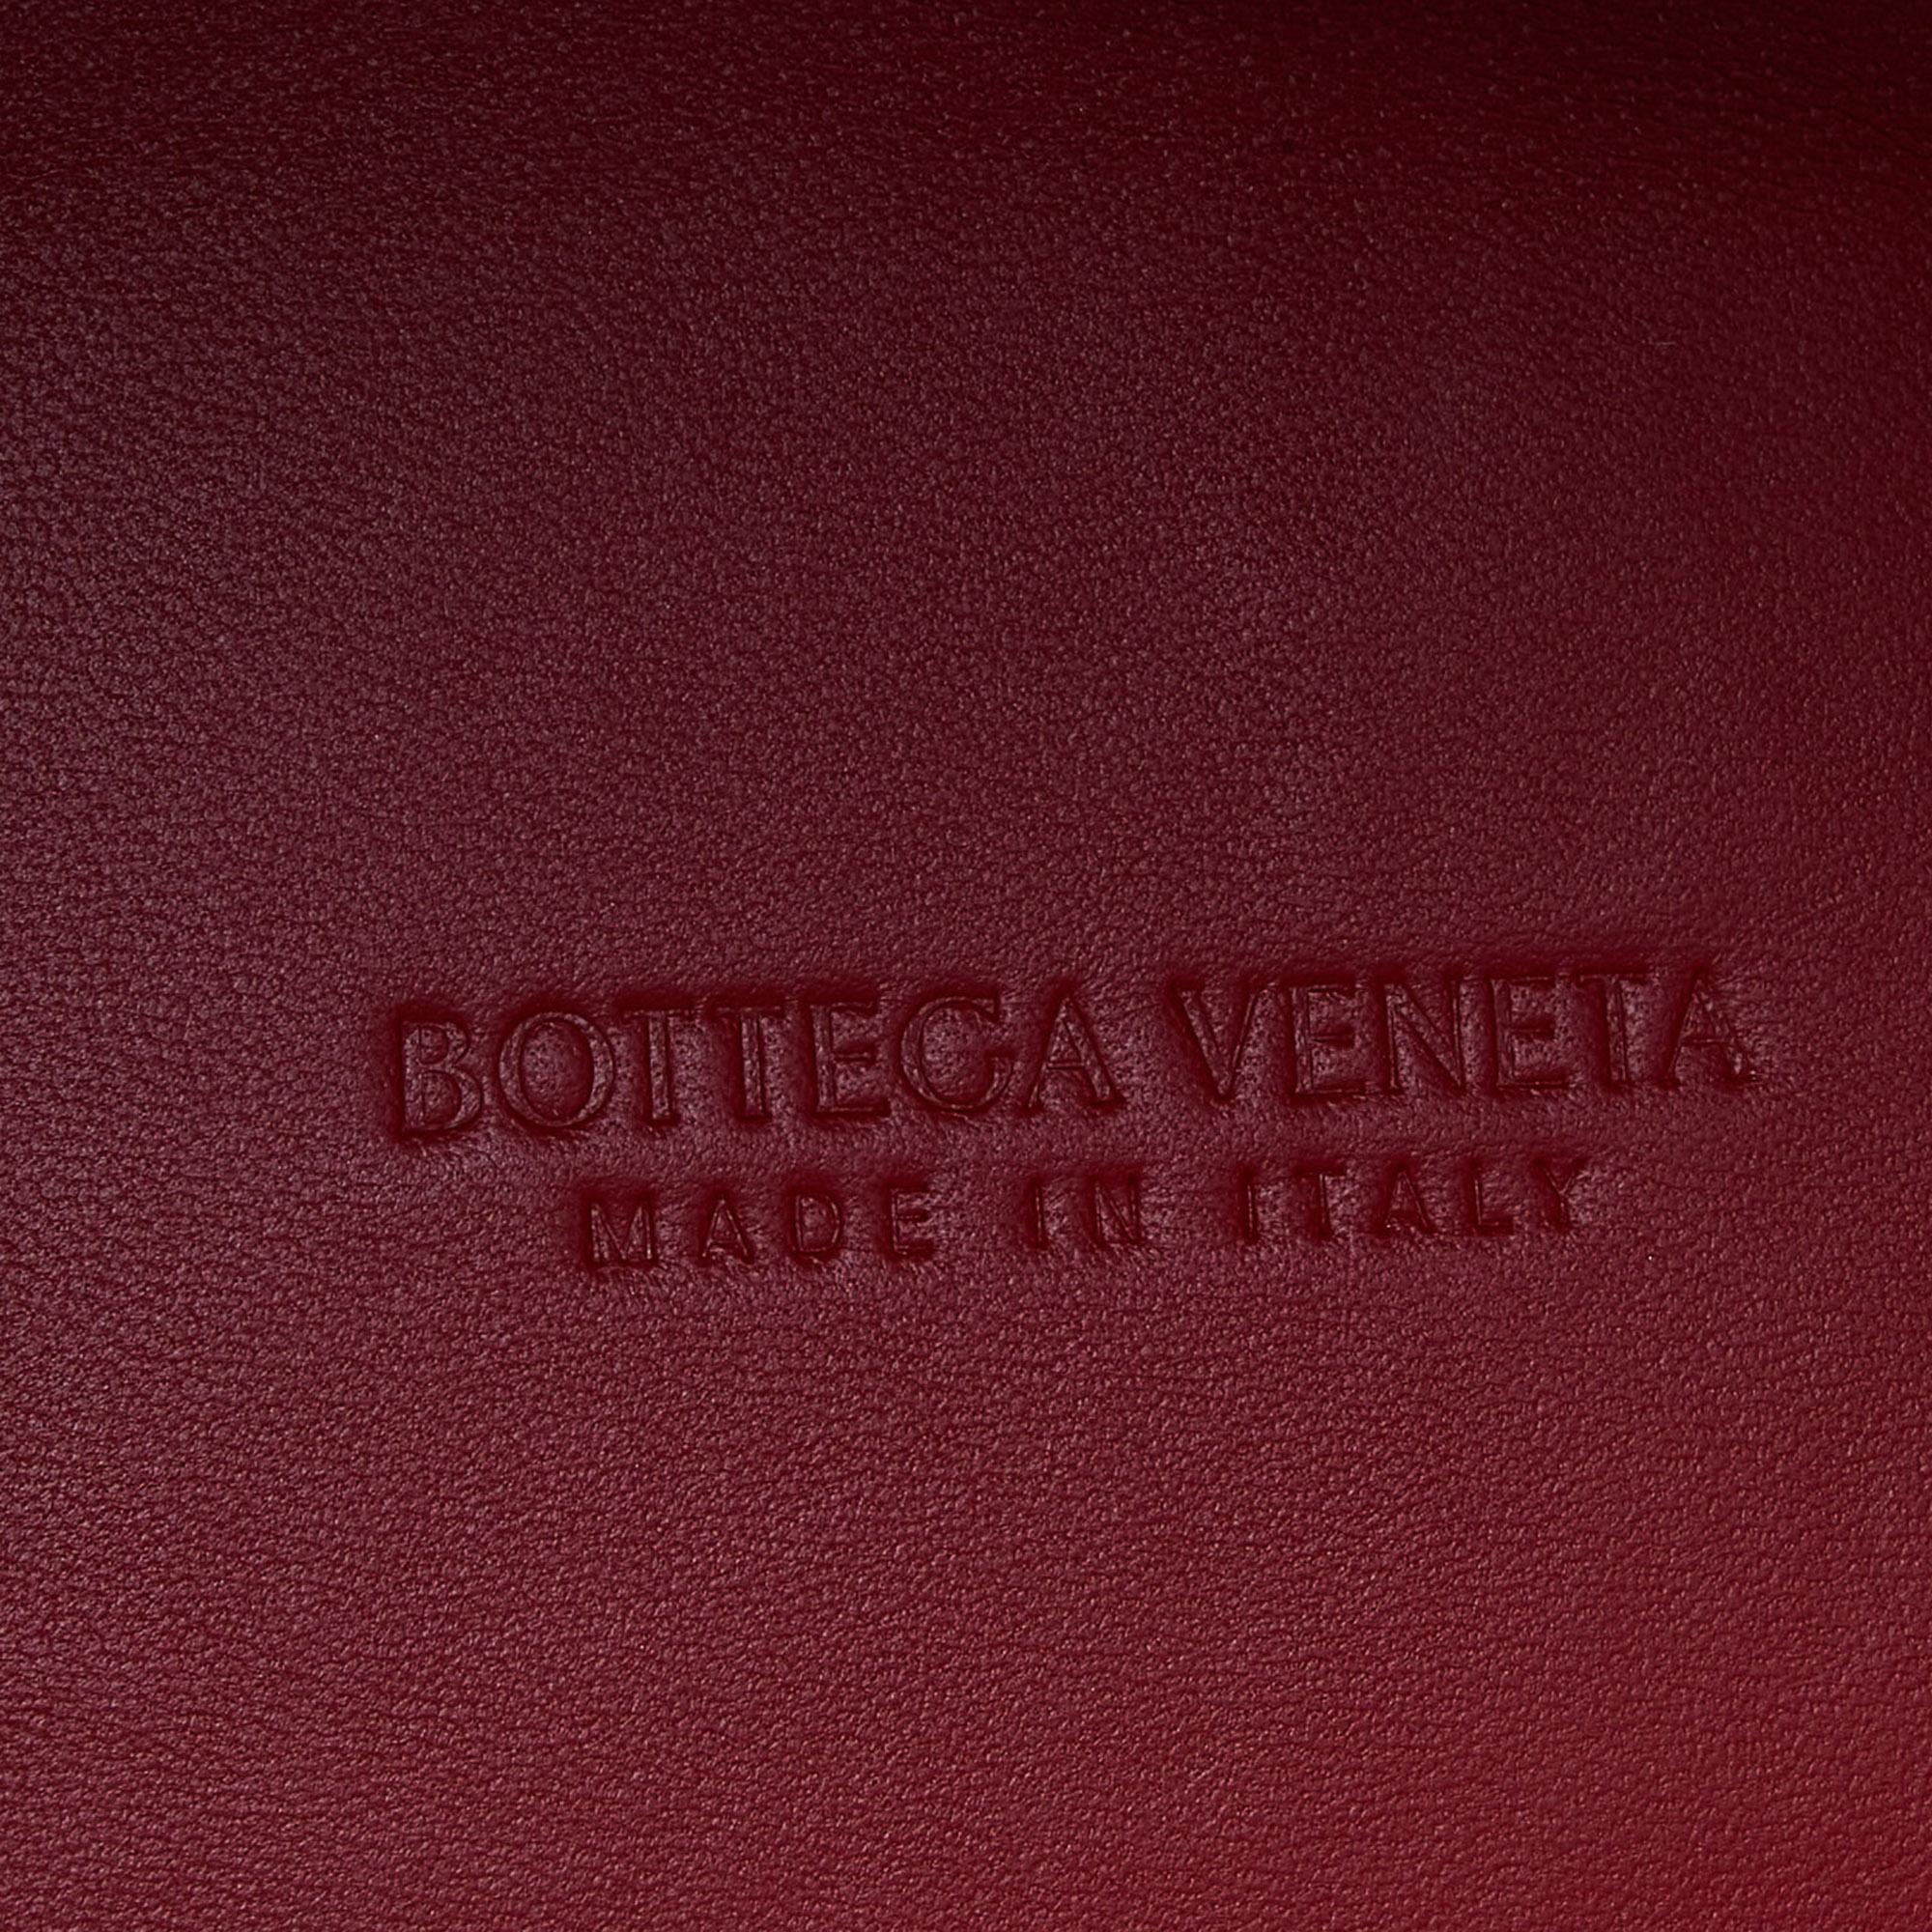 Bottega Veneta Brown Intrecciato Leather Medium Arco Tote 10